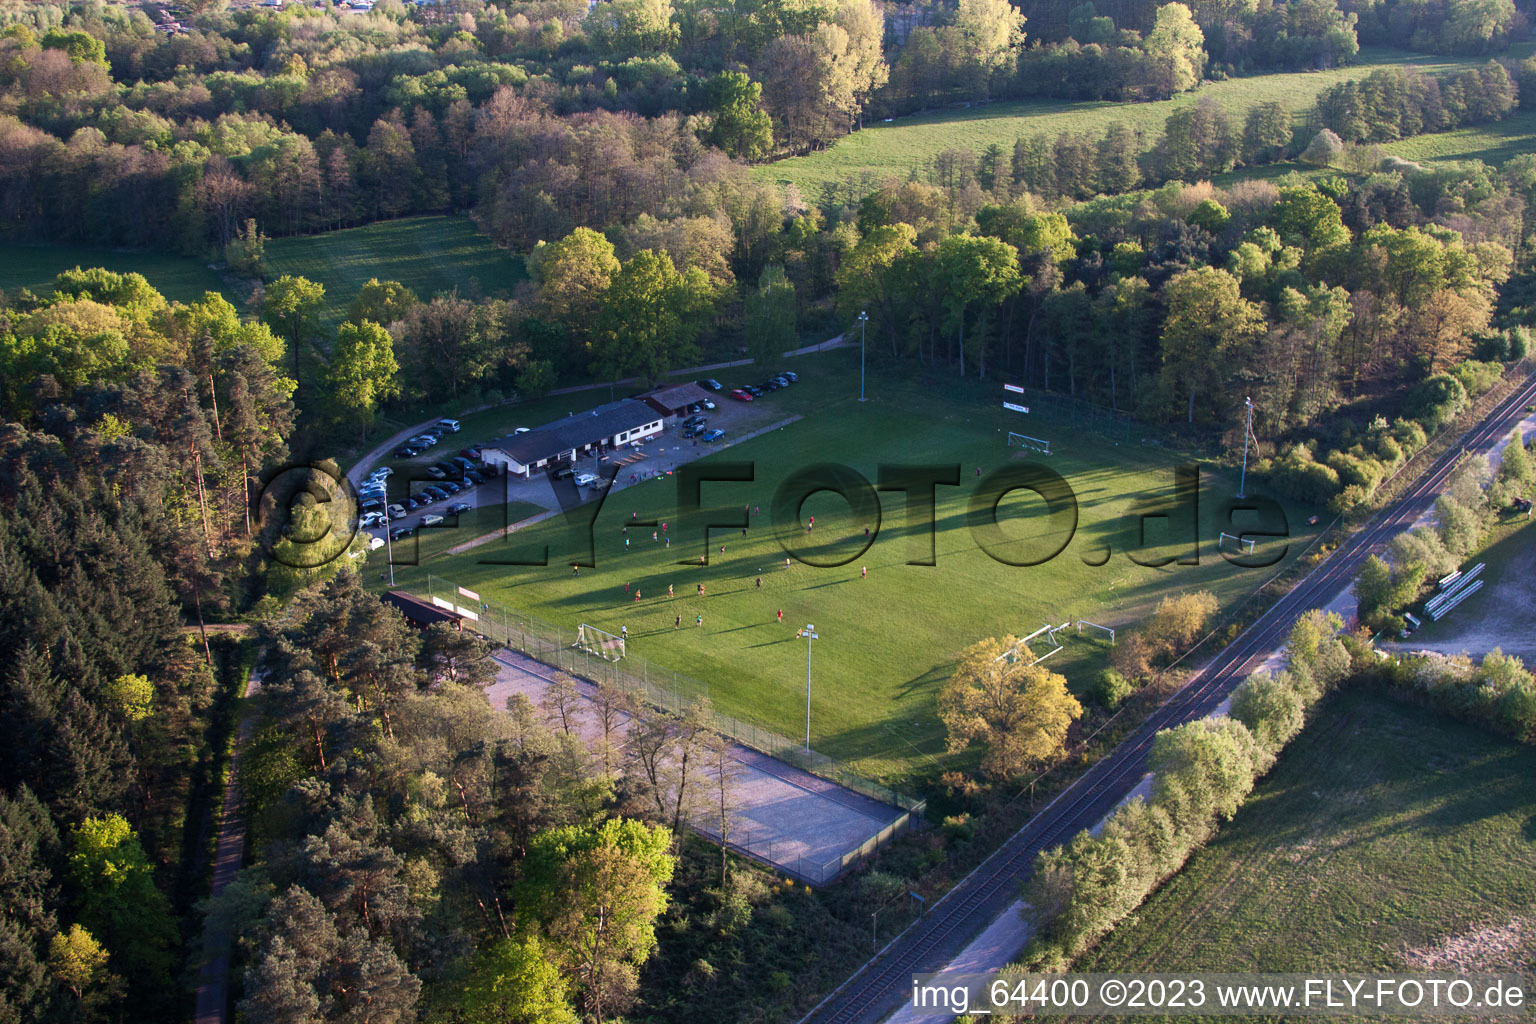 Sports ground in Schweighofen in the state Rhineland-Palatinate, Germany